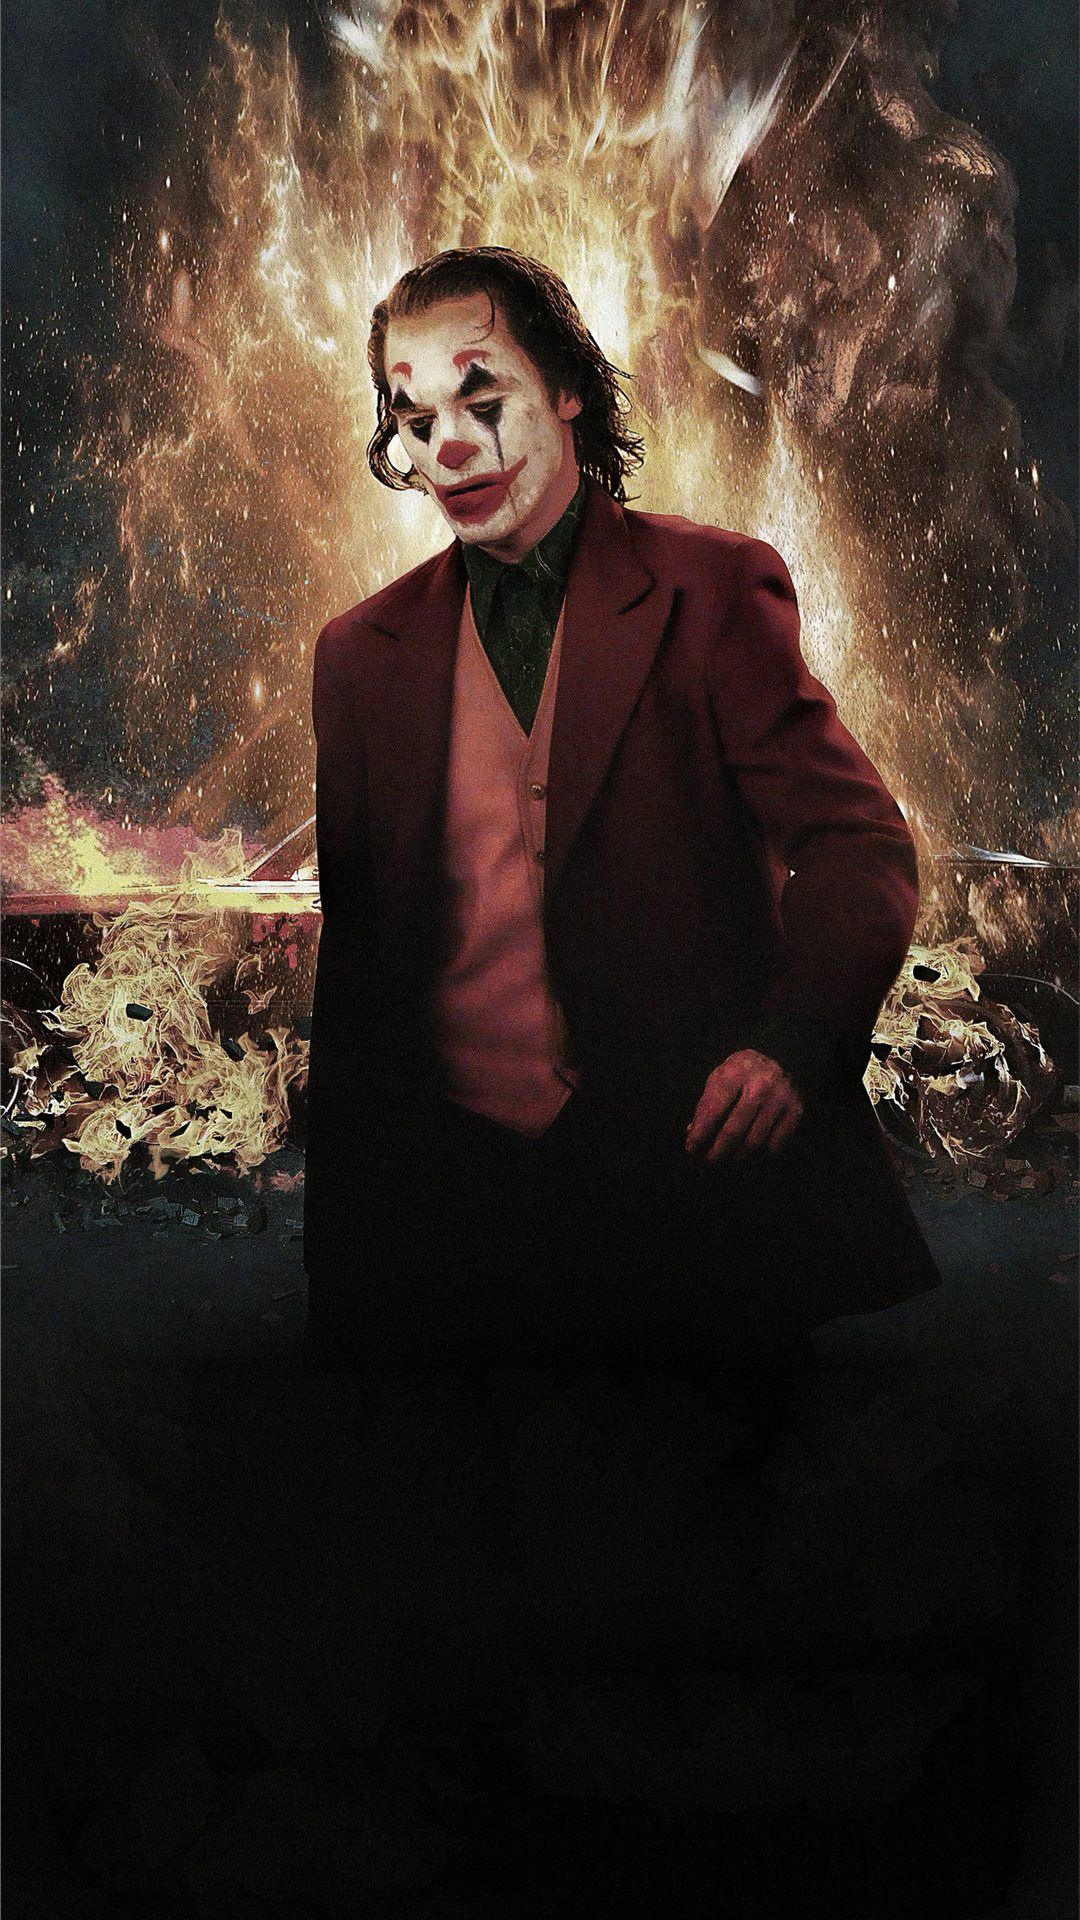 Free download the joker 2019 movie 4k new wallpaper , beaty your iphone. # Joker Movie #joker Movies #movie. Joker wall art, Print picture, iPhone wallpaper